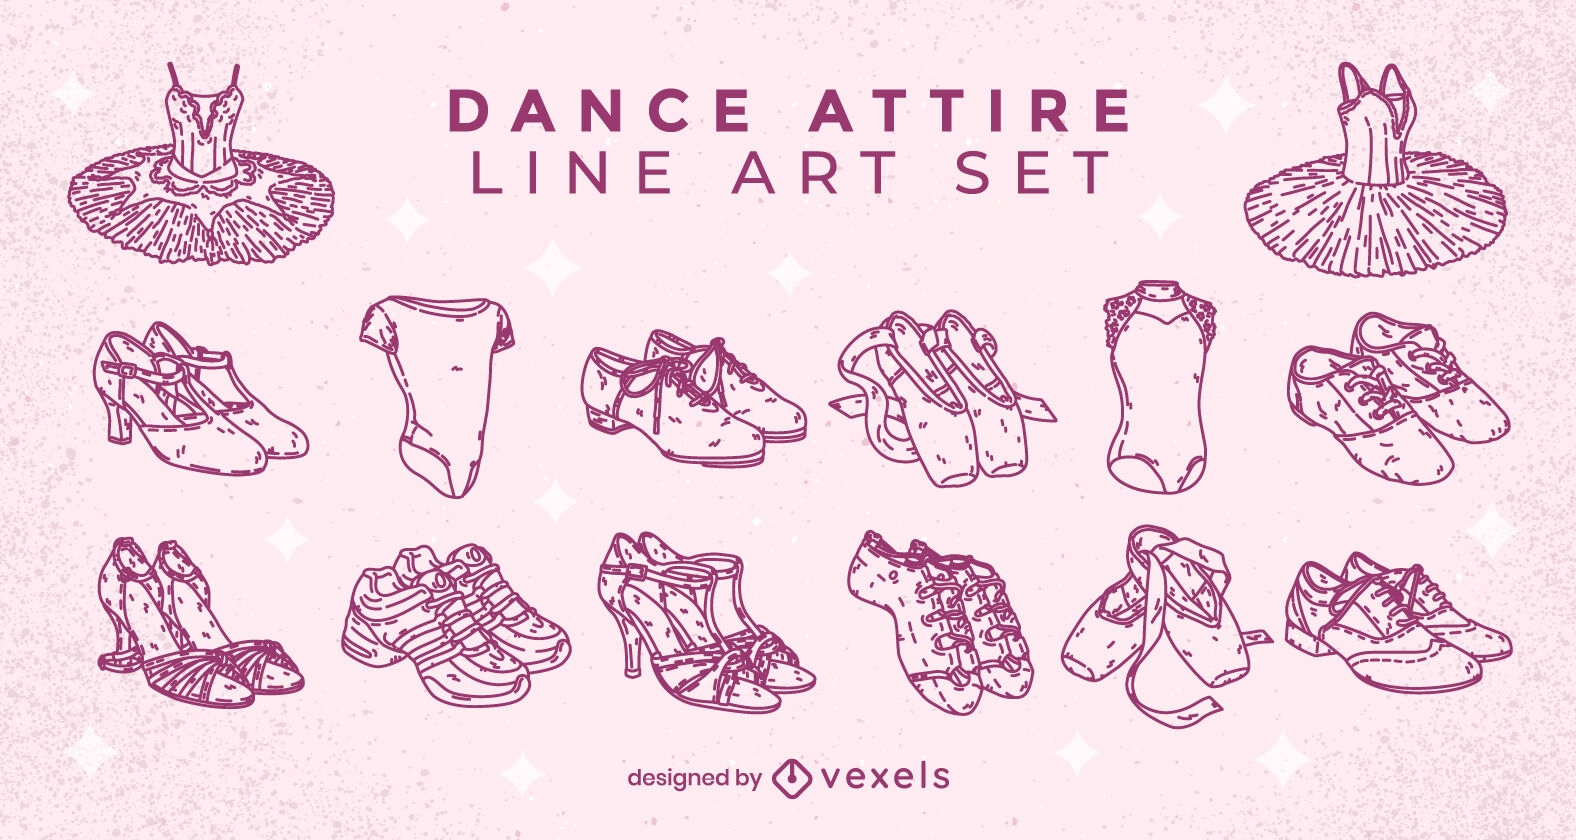 Dance attire line art set